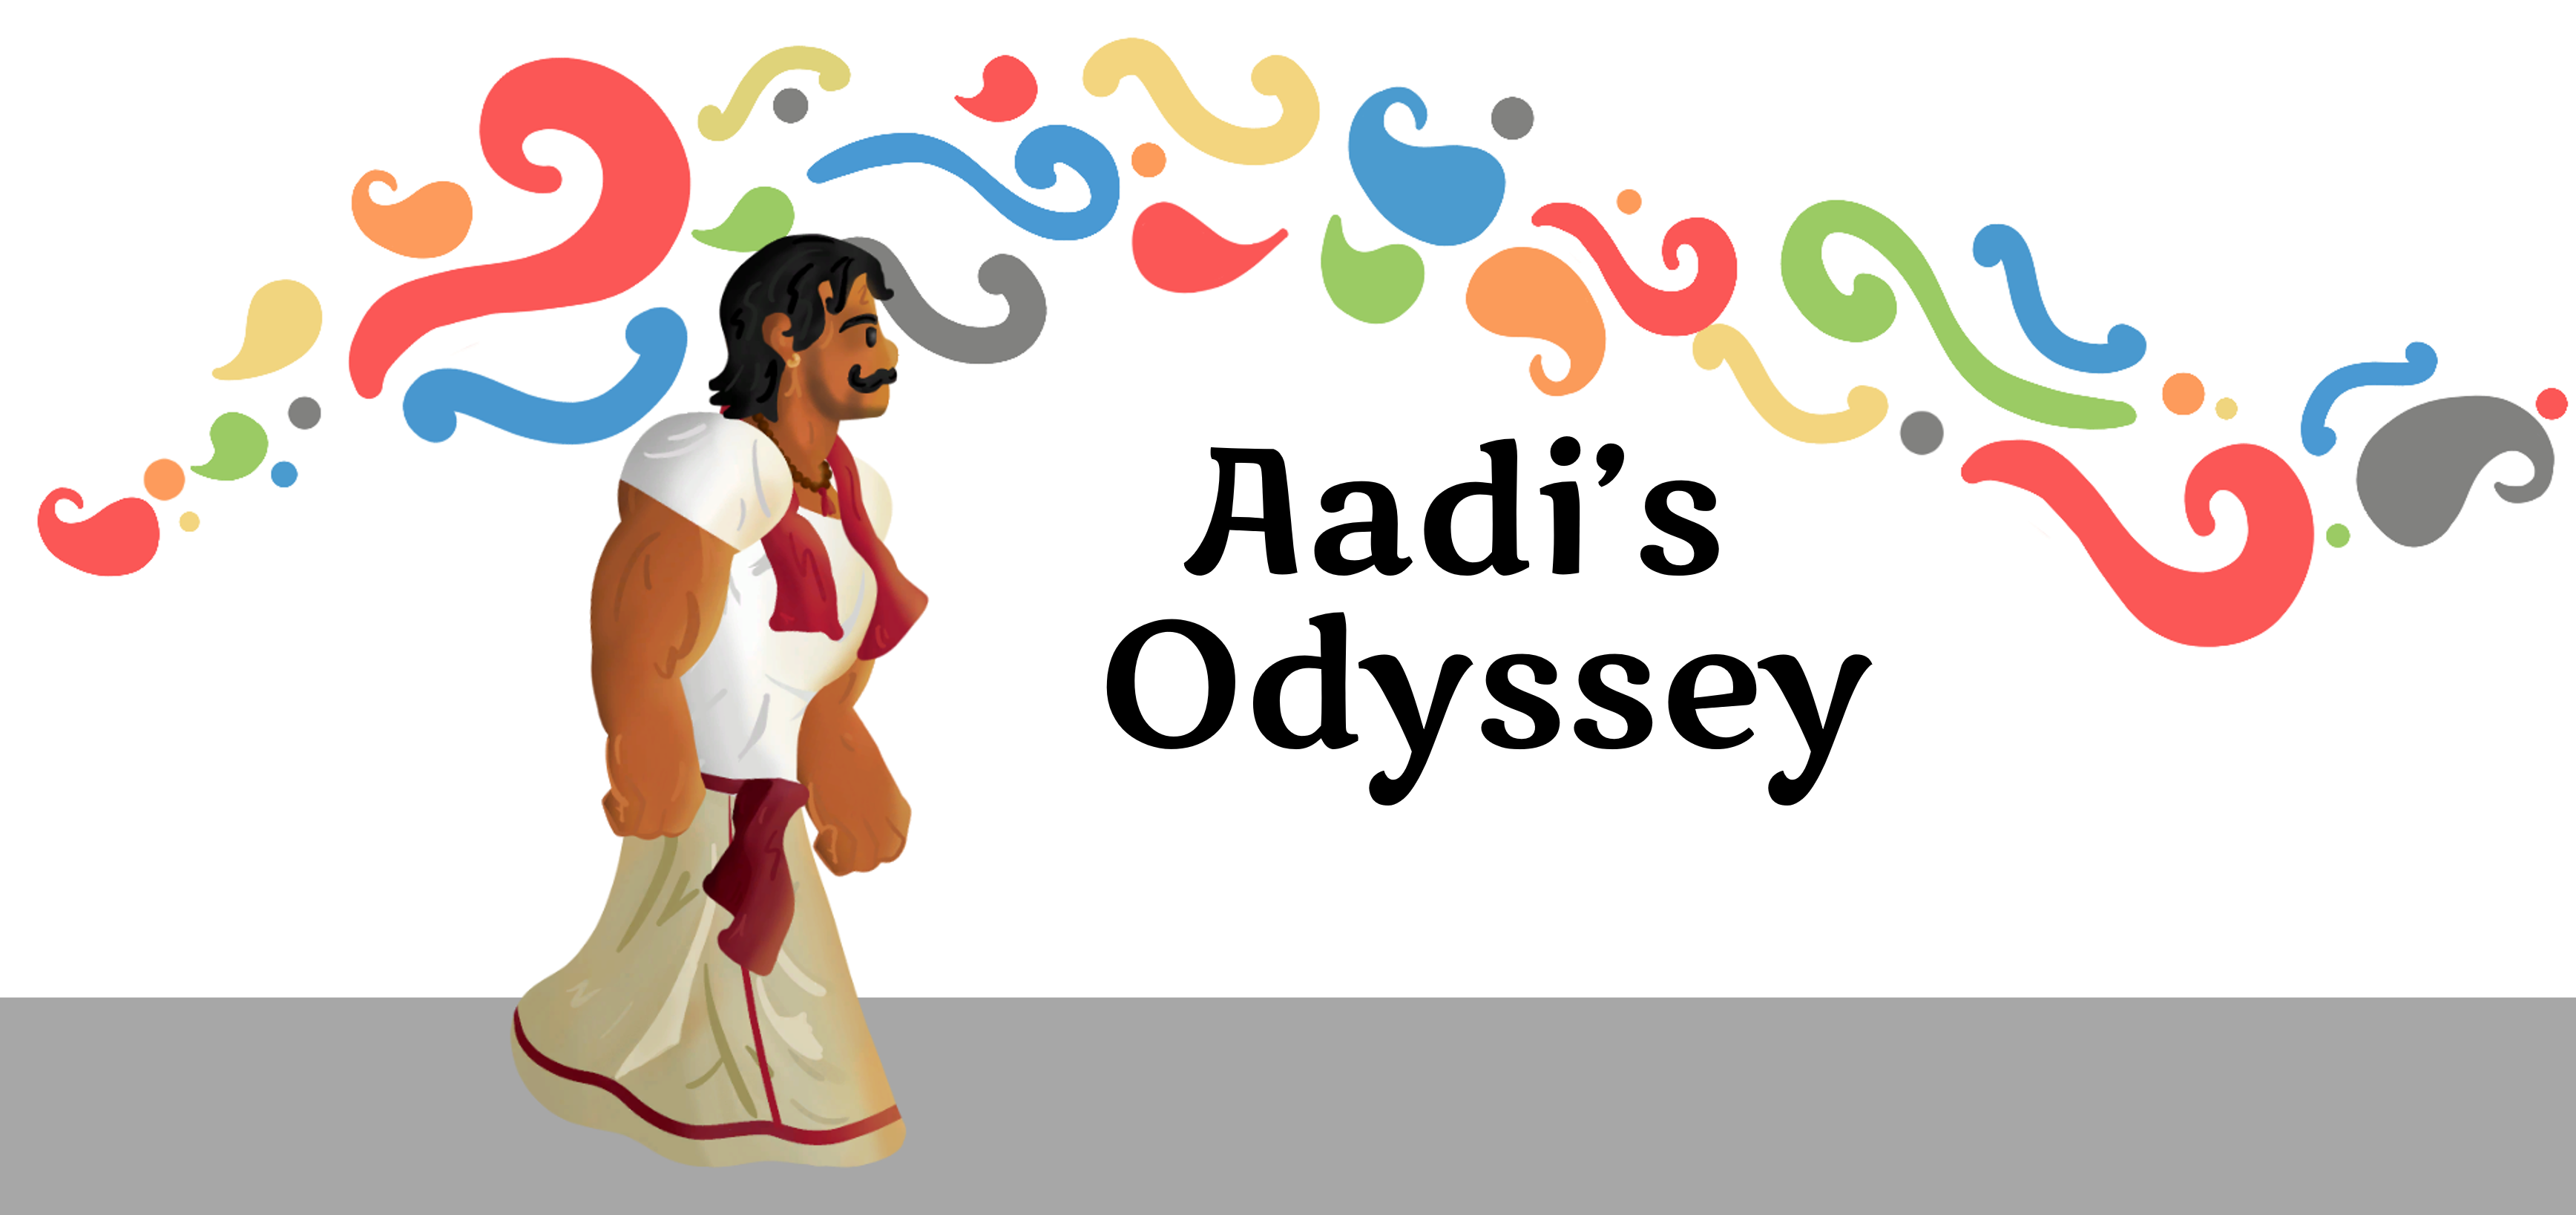 Aadi's Odyssey